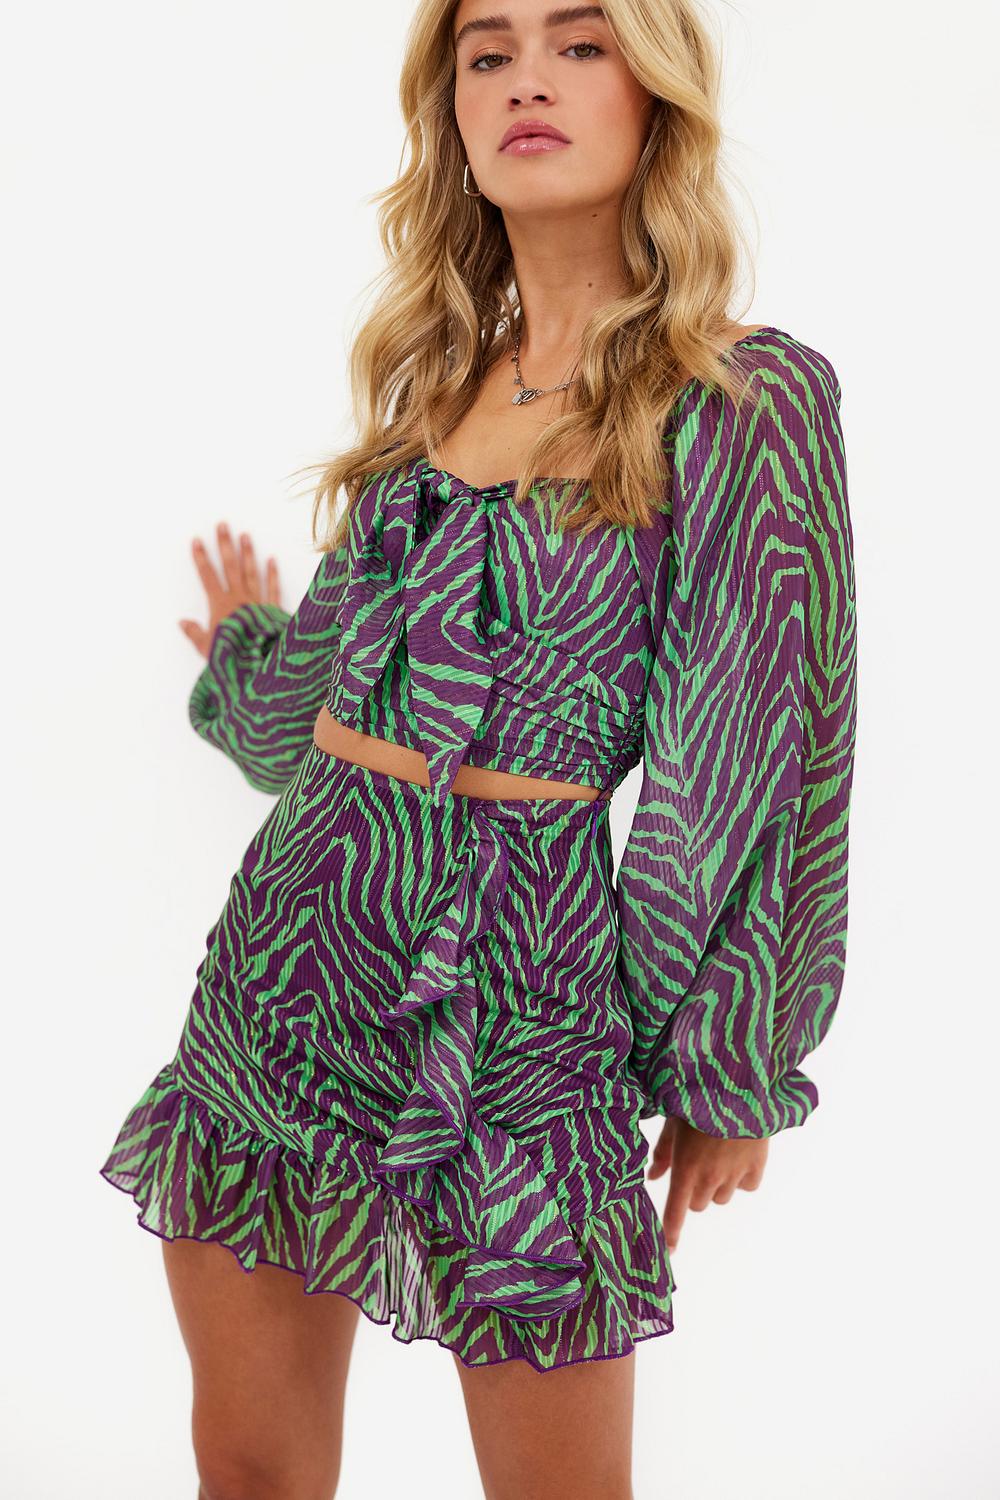 Purple skirt with zebra print